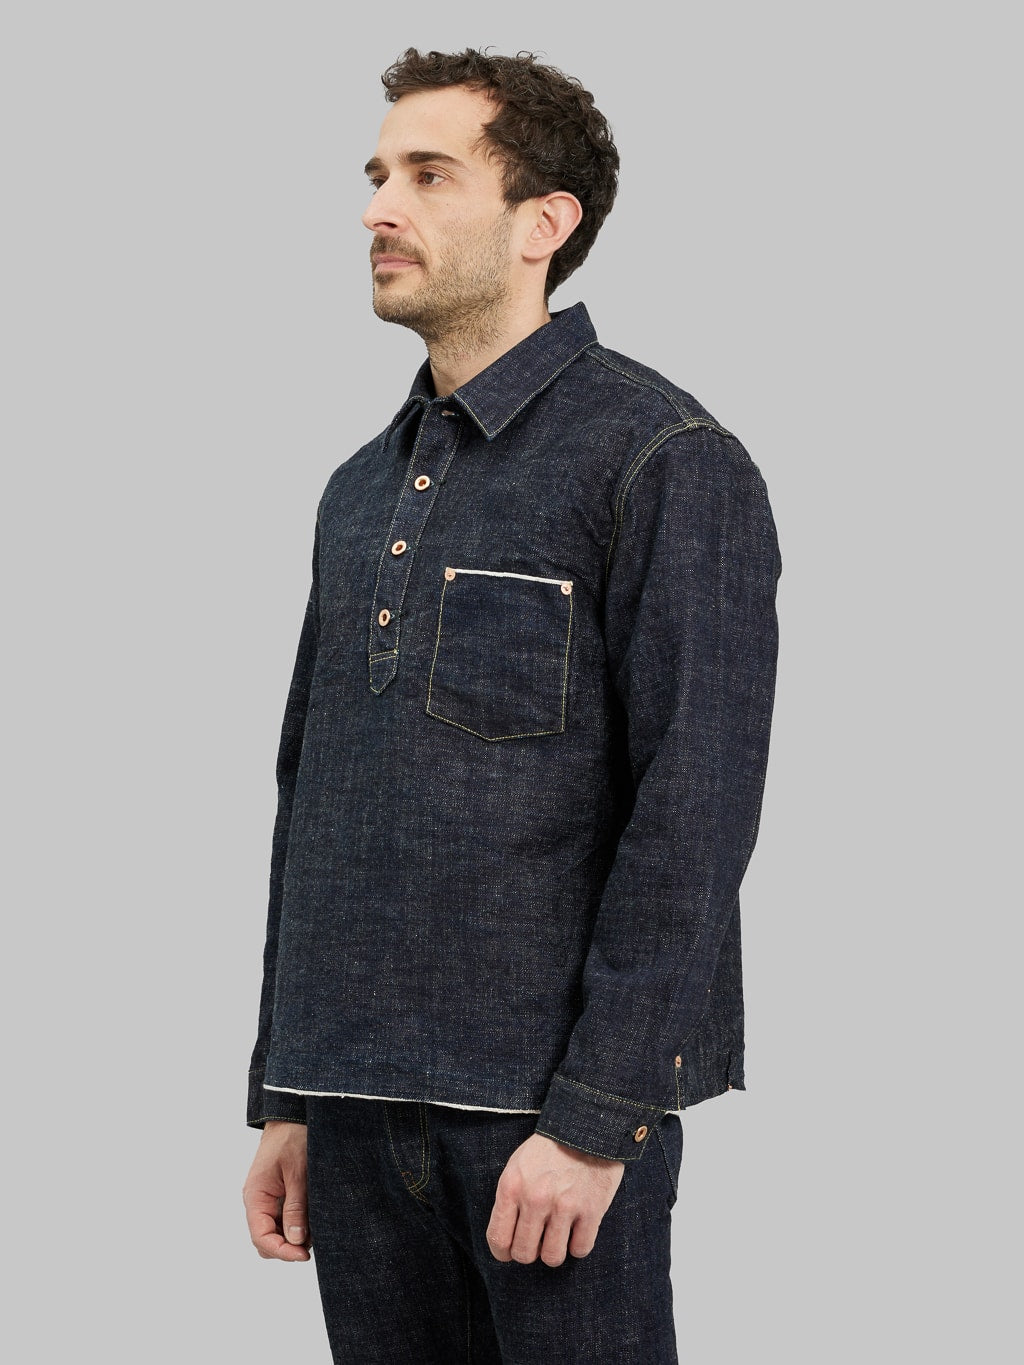 Fob factory denim pullover pocket shirt model side view